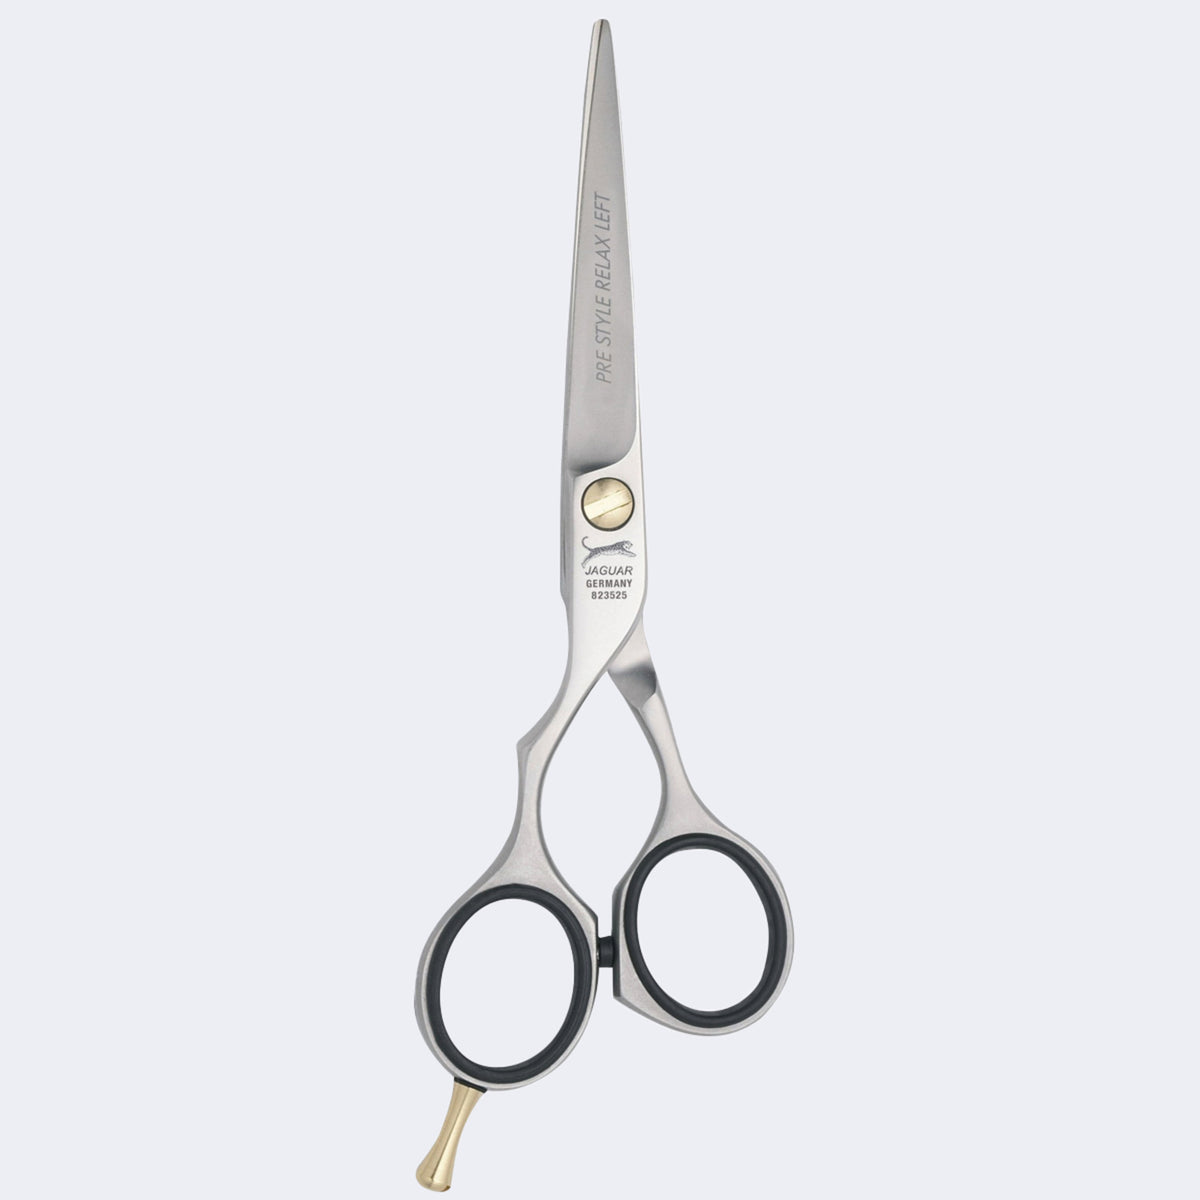 PRE STYLE RELAX LEFTY SHEAR 5-3/4" LEFTY scissors, offset handles